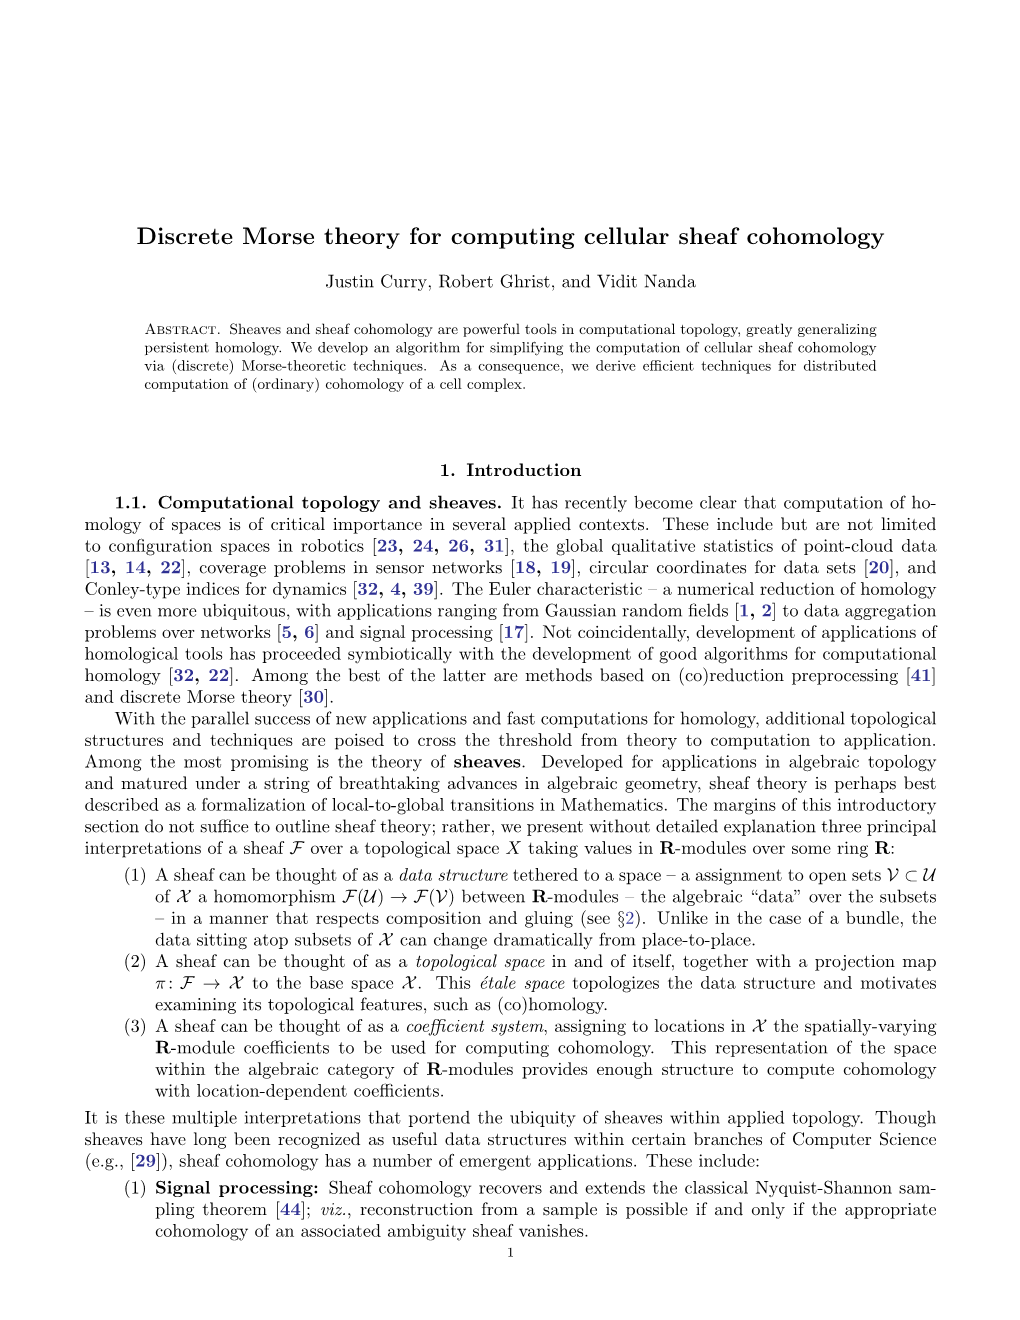 Discrete Morse Theory for Computing Cellular Sheaf Cohomology